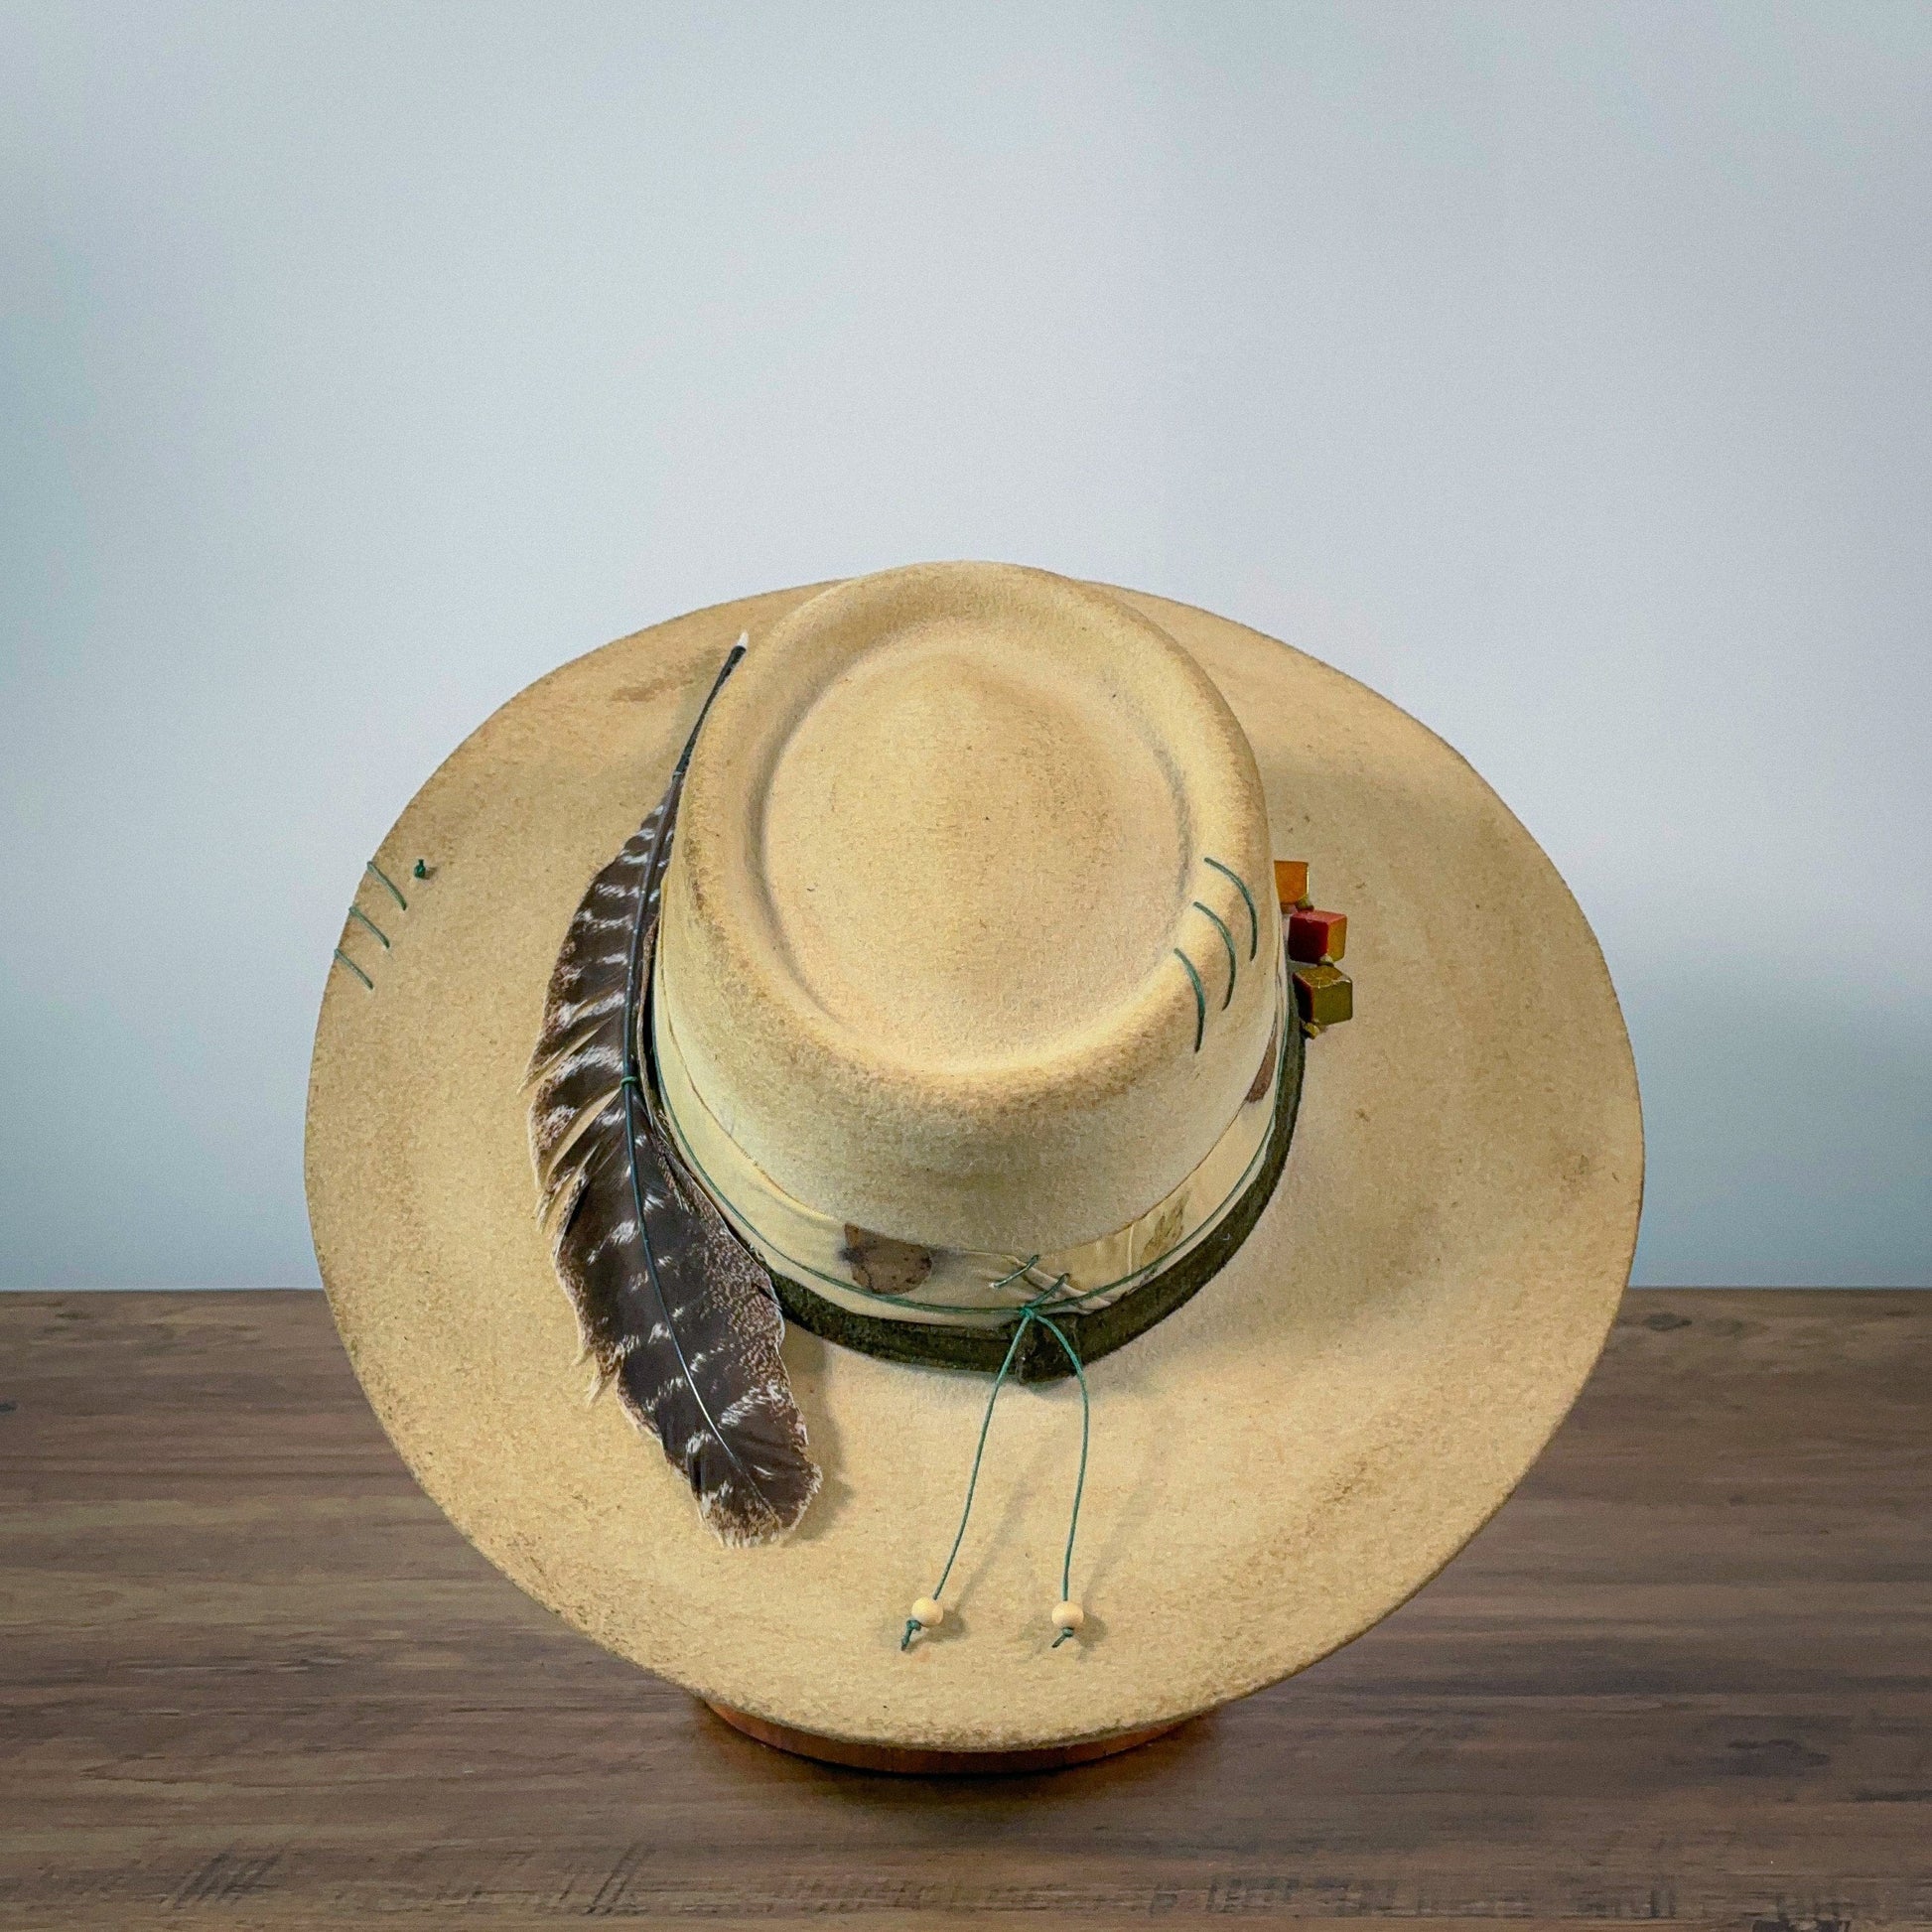 Aukala M Ivory Felt Hat with Unique Acrylic Accents